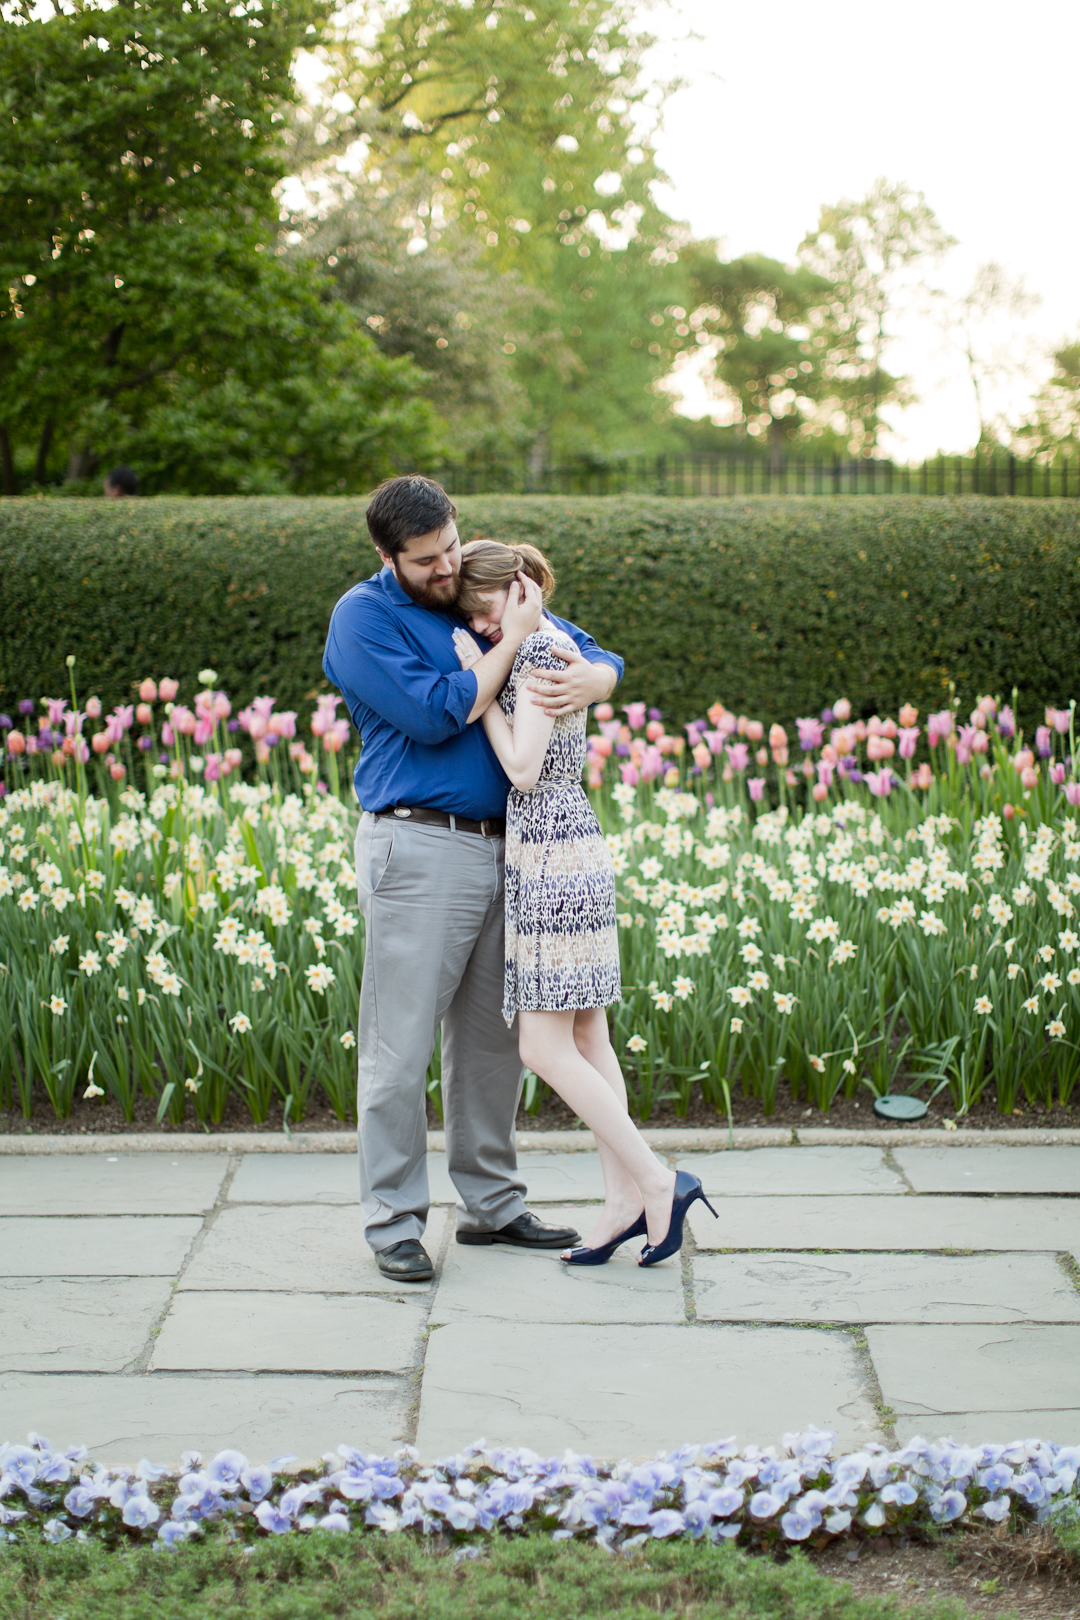 Melissa Kruse Photography - Danielle & Douglas Central Park Conservatory Garden Engagement Photos-125.jpg